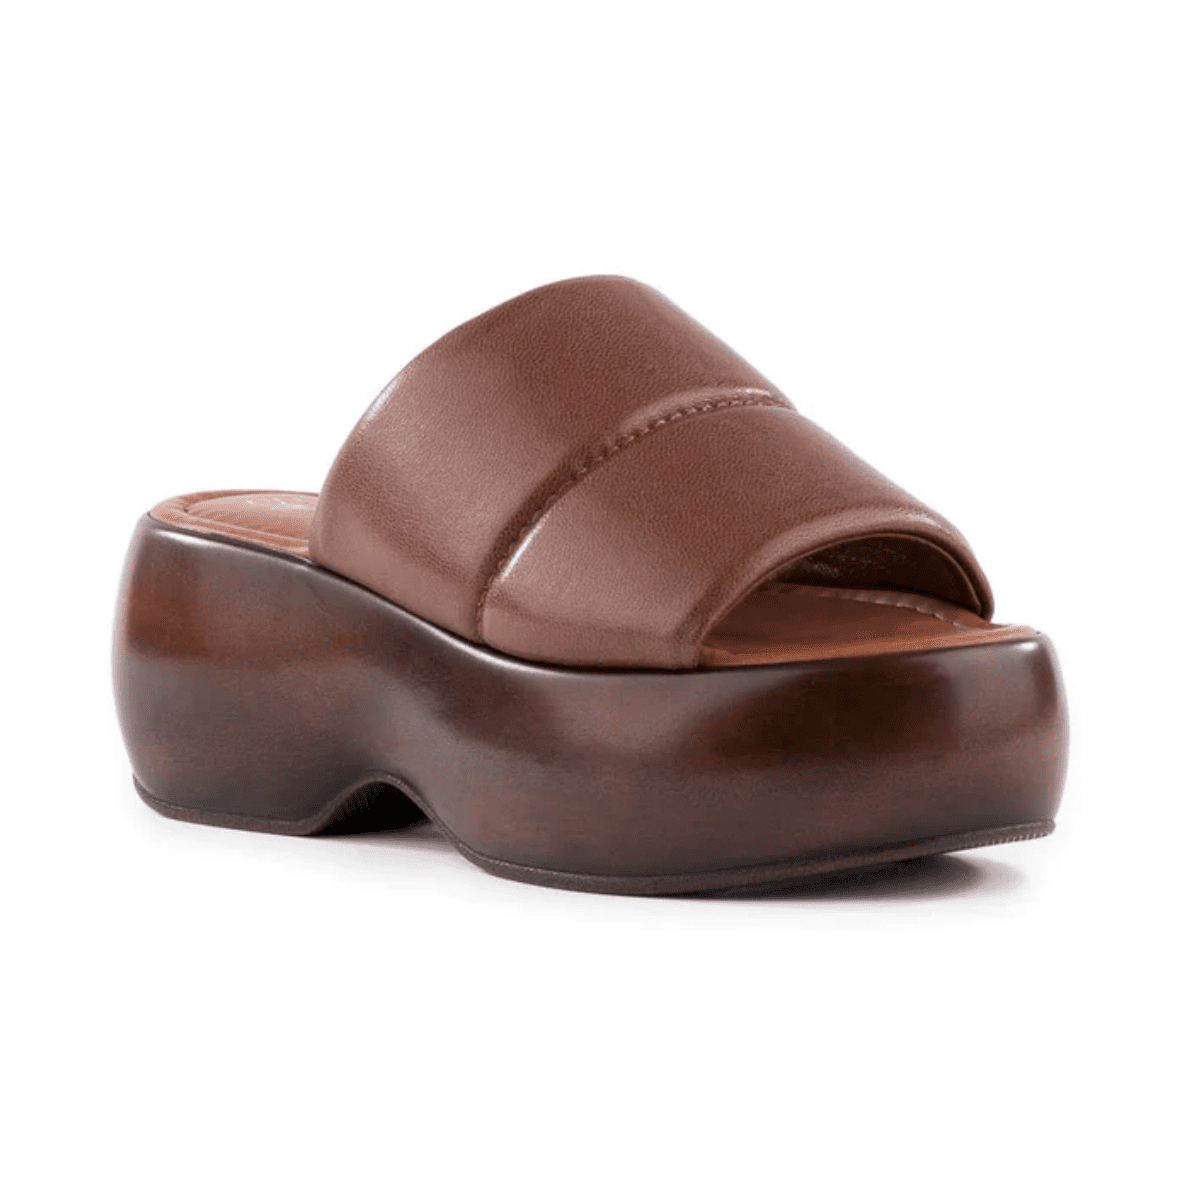 Seychelles "Sorry About It" Slip-On Platform Sandals - Brown